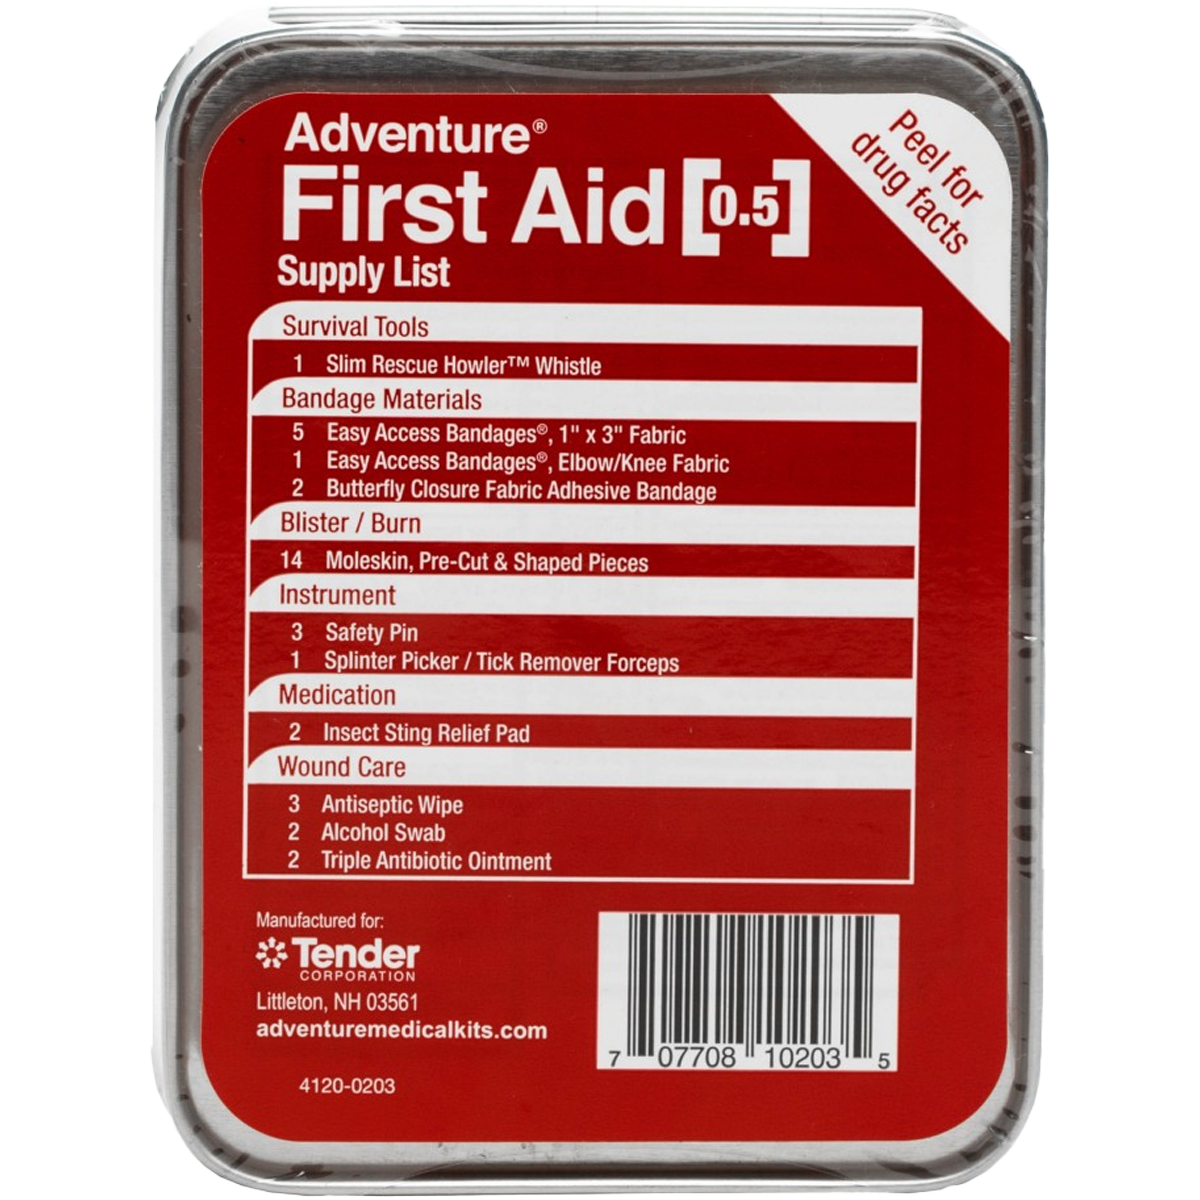 Adventure First Aid, 0.5 Tin alternate view